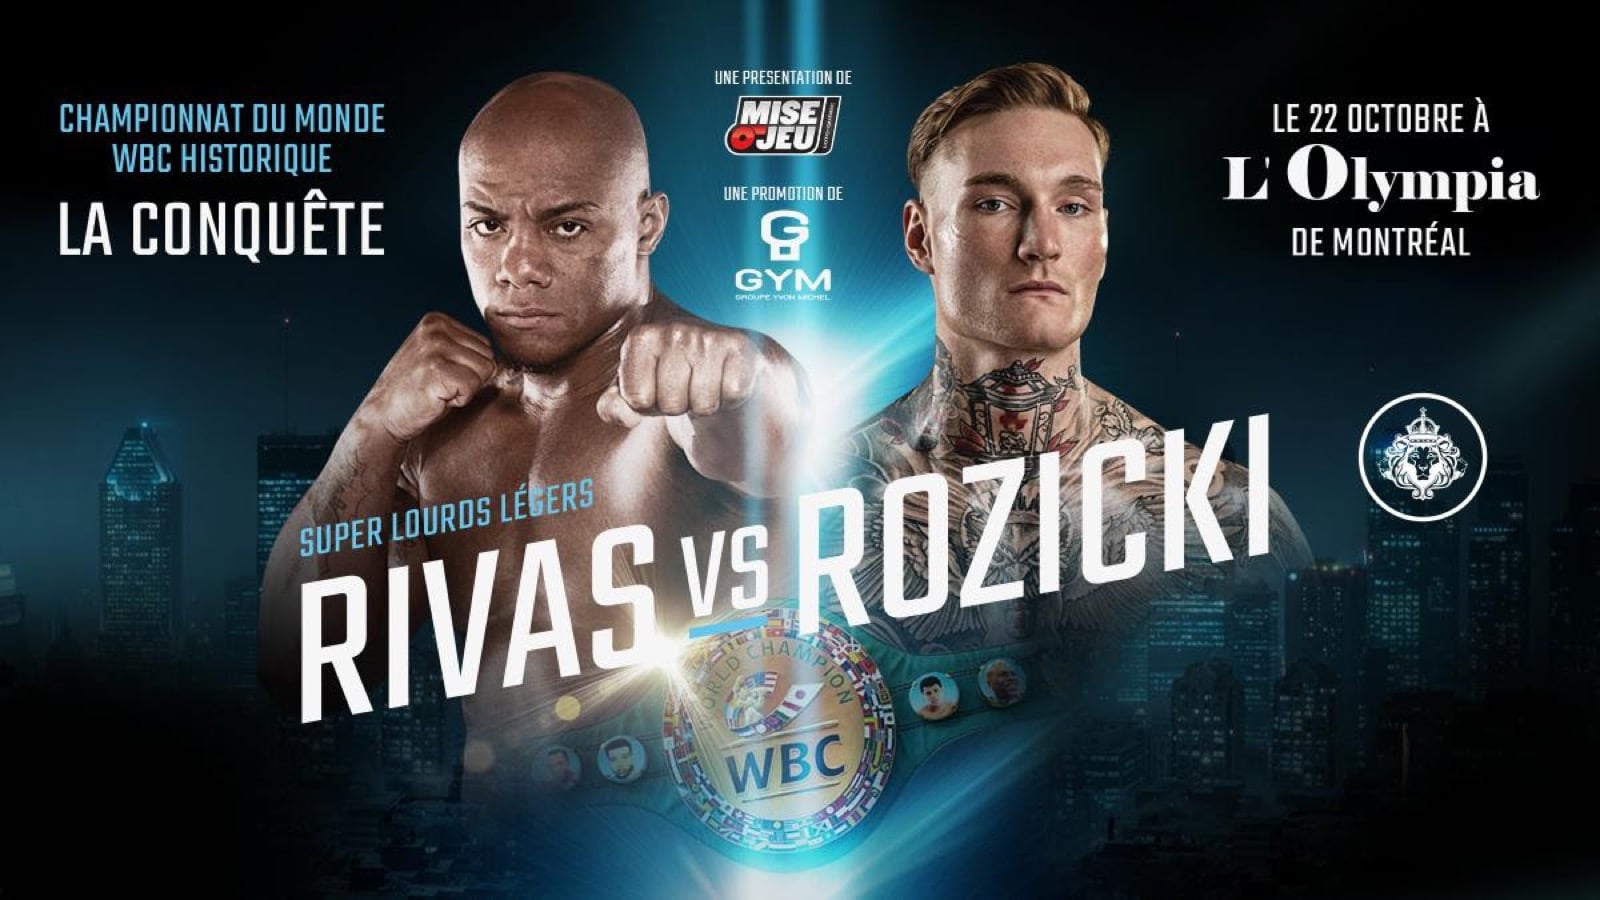 Rivas vs Rozicki - ESPN+, FITE TV - Oct 22 - 7 pm ET